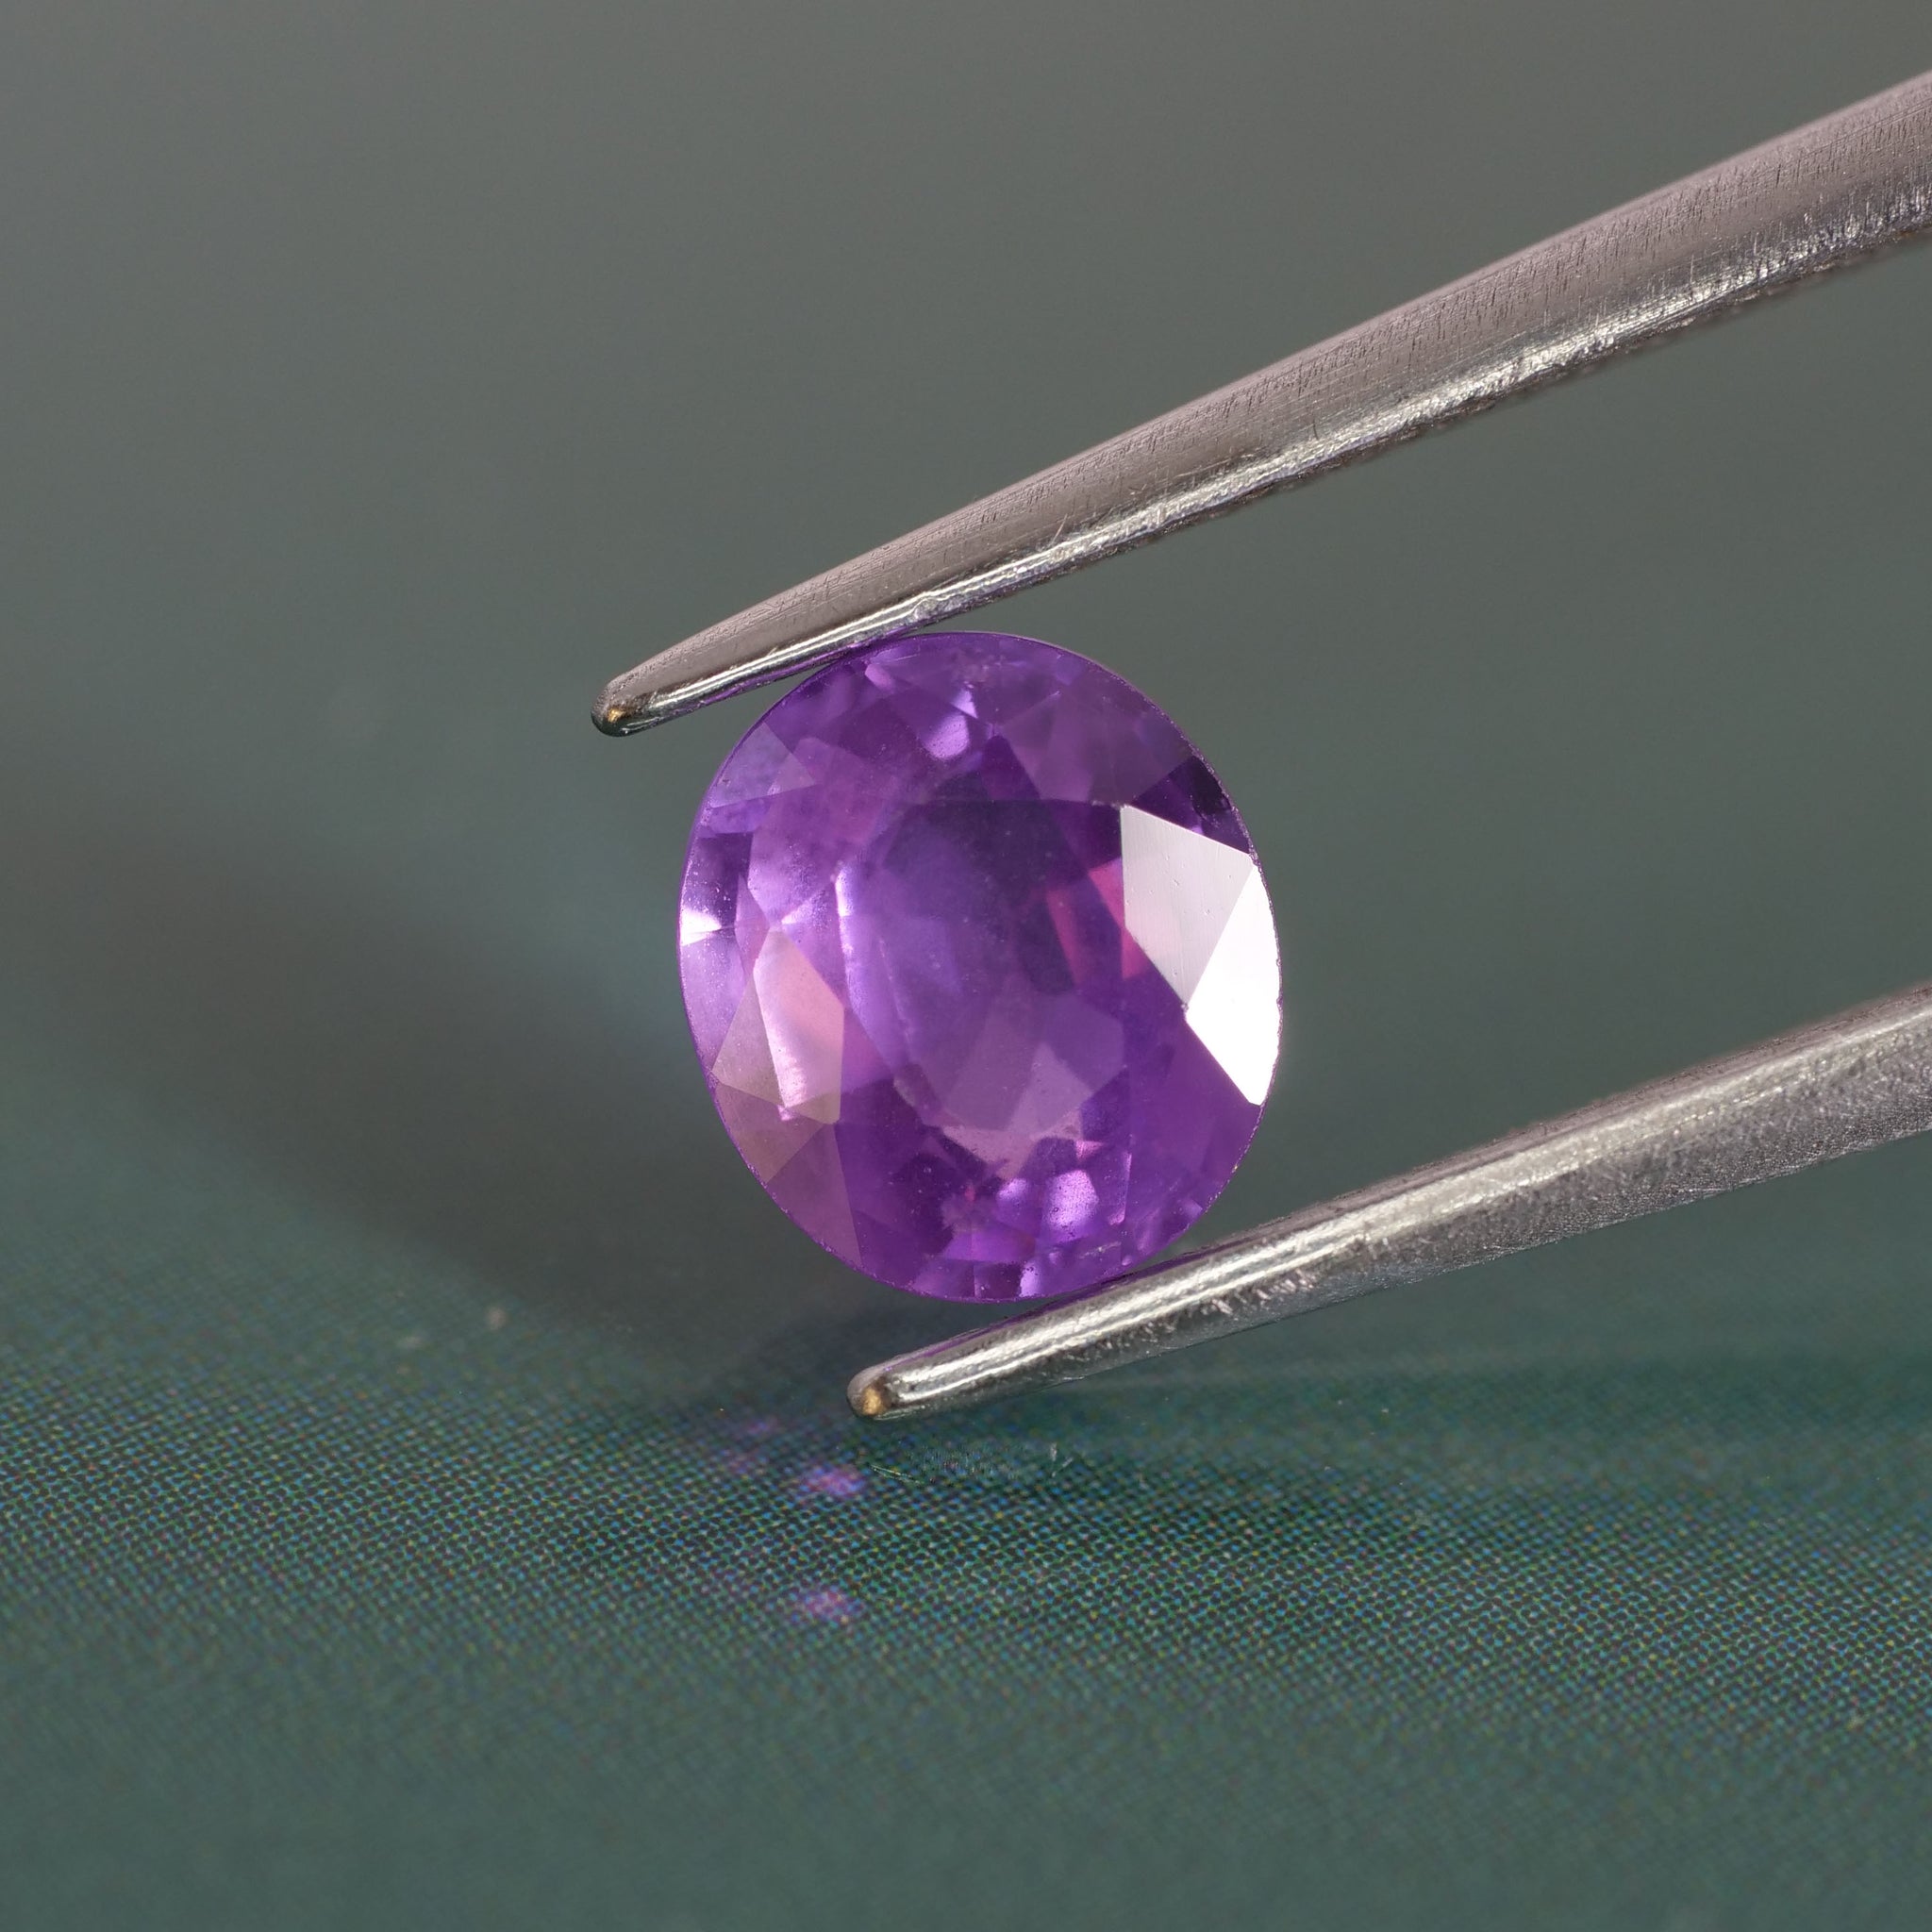 Sapphire opalescent | natural, pinkish purple, oval cut 6.6x5.8 mm, 1.1ct - Eden Garden Jewelry™